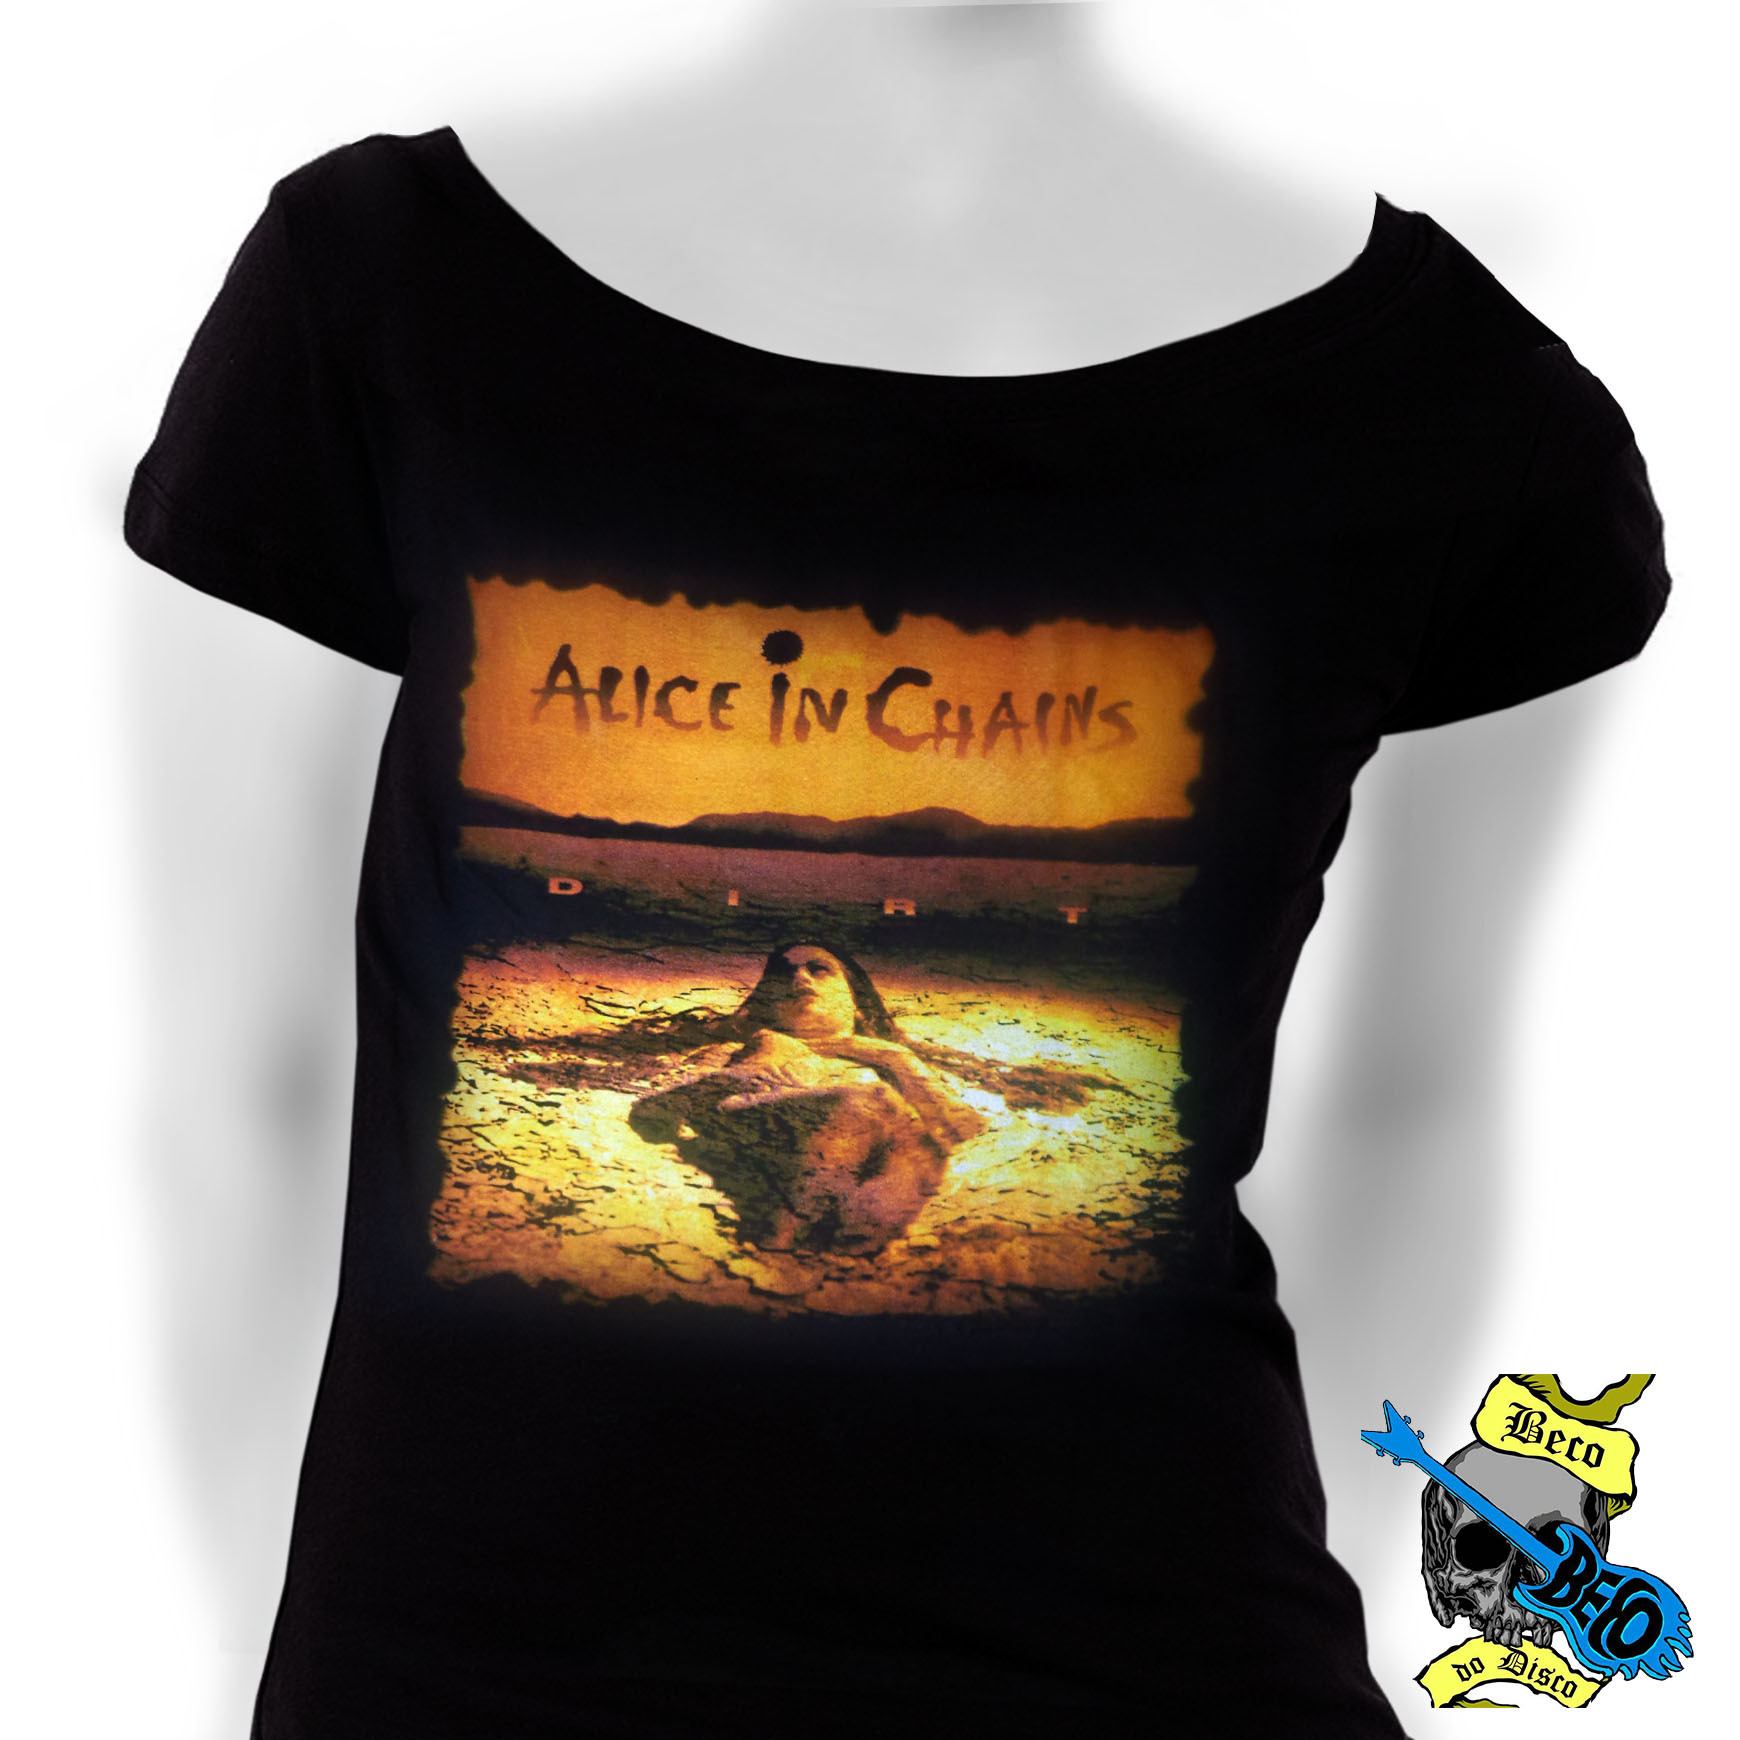 Gola Canoa - Alice In Chains - gc059